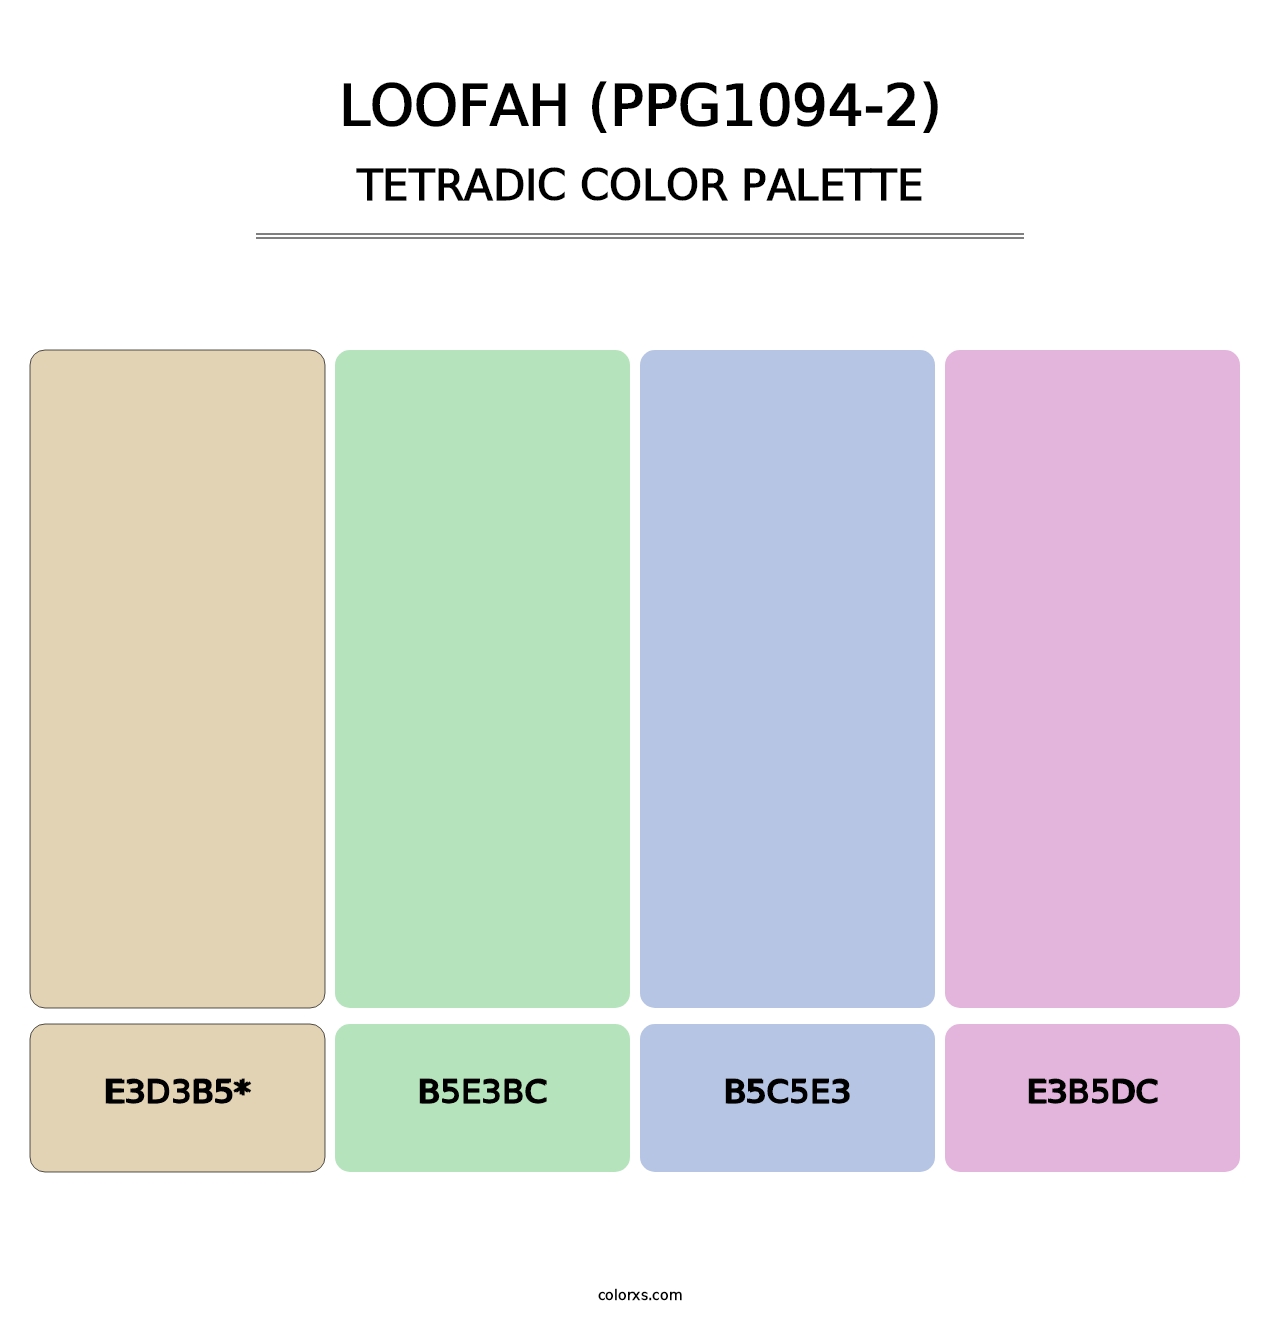 Loofah (PPG1094-2) - Tetradic Color Palette